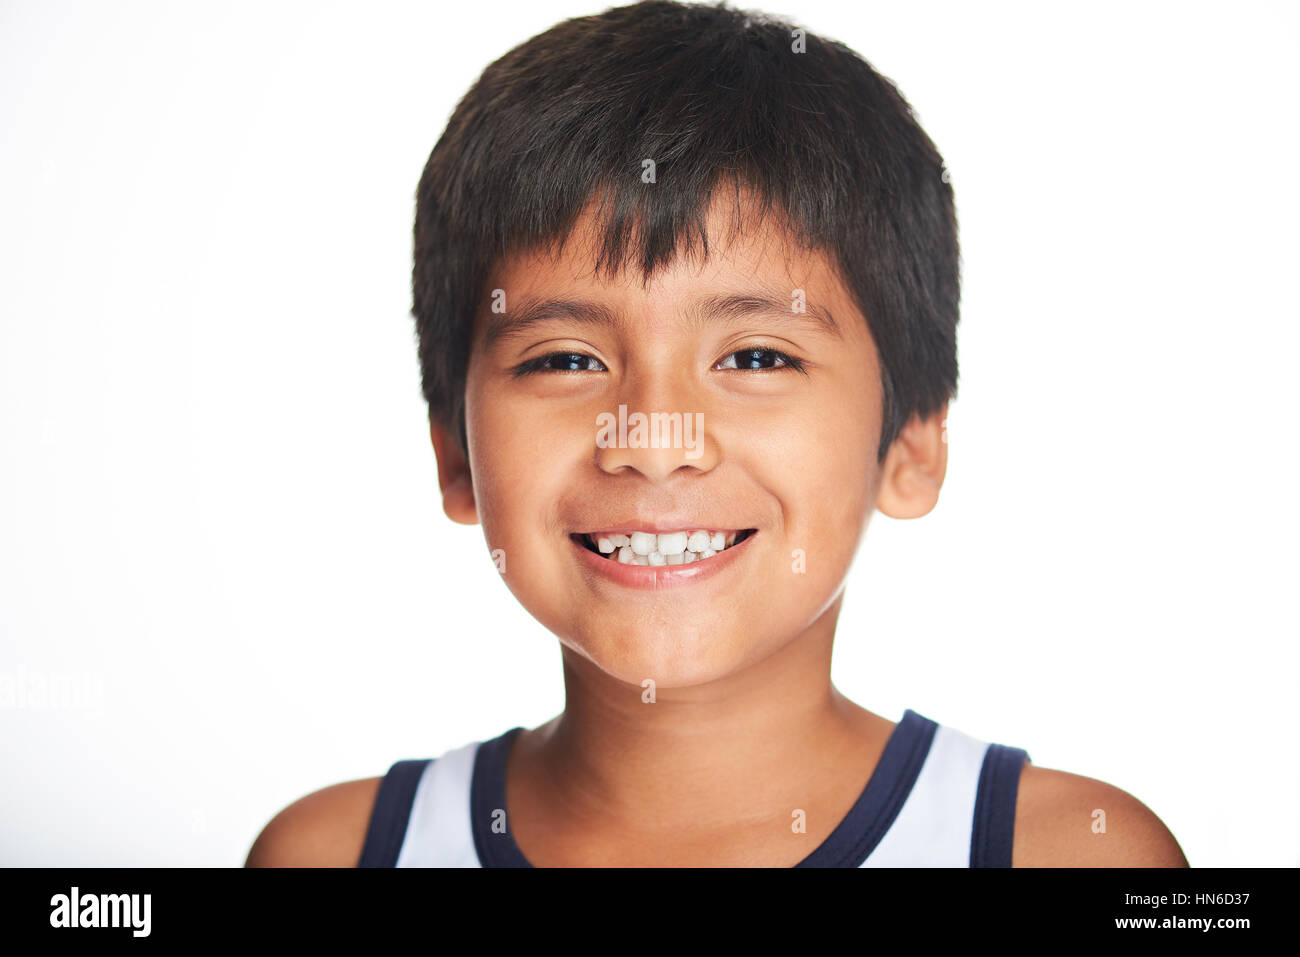 Portrait Of Smiling Hispanic Boy Isolated On White HN6D37 